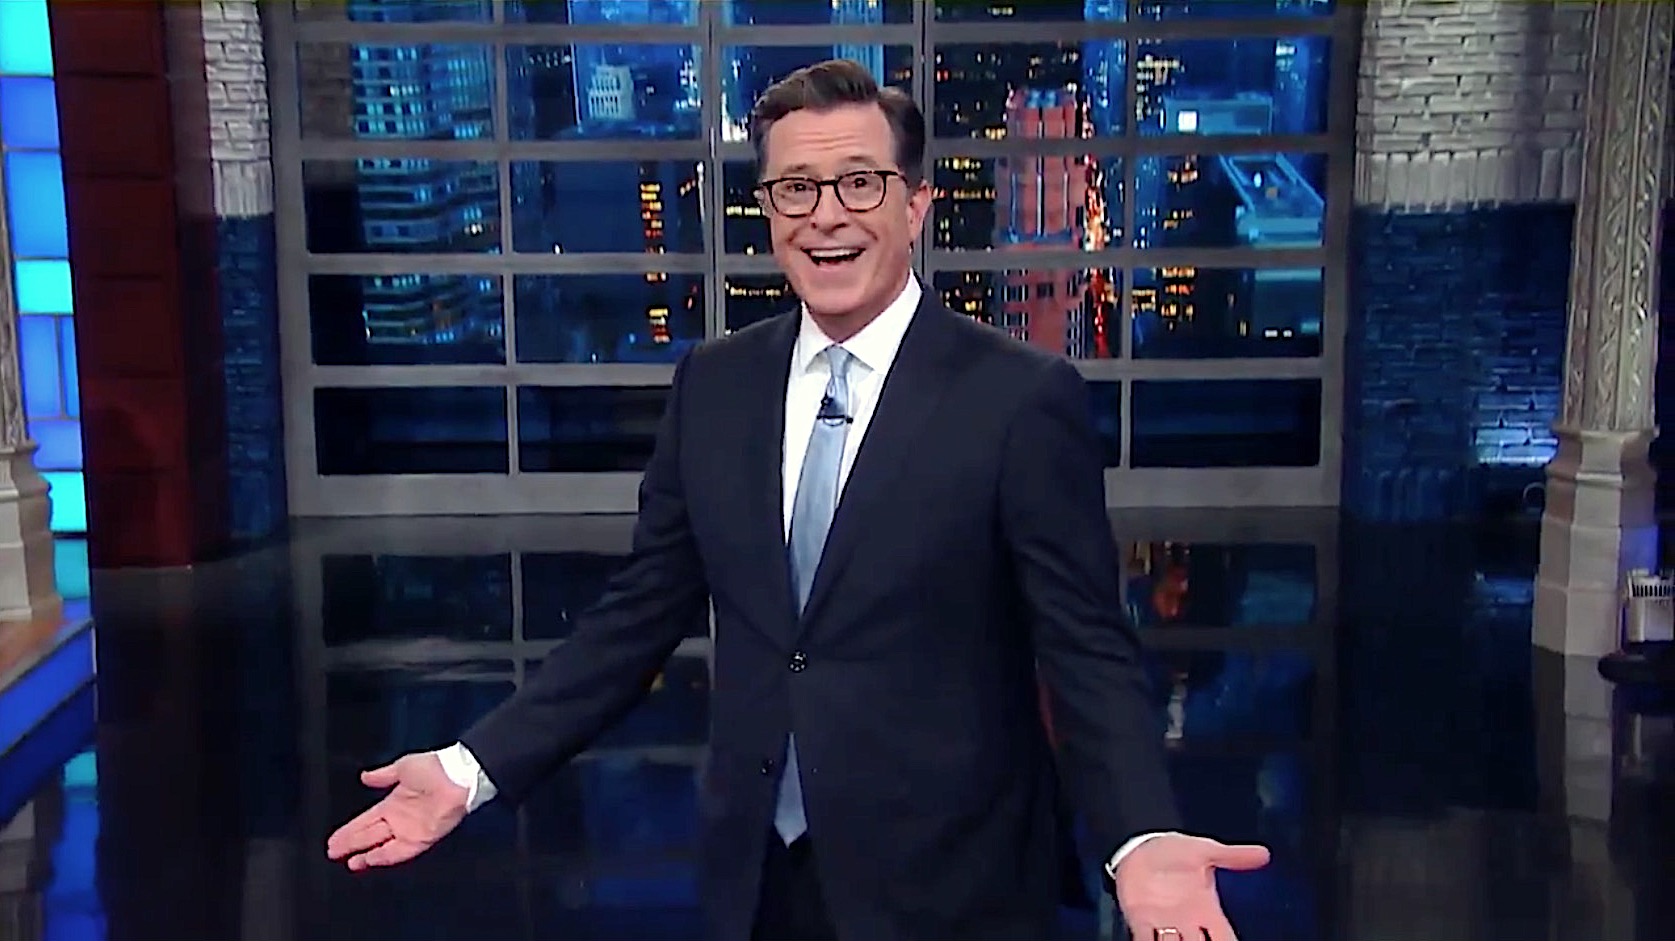 Stephen Colbert jokes darkly about nuclear armageddon